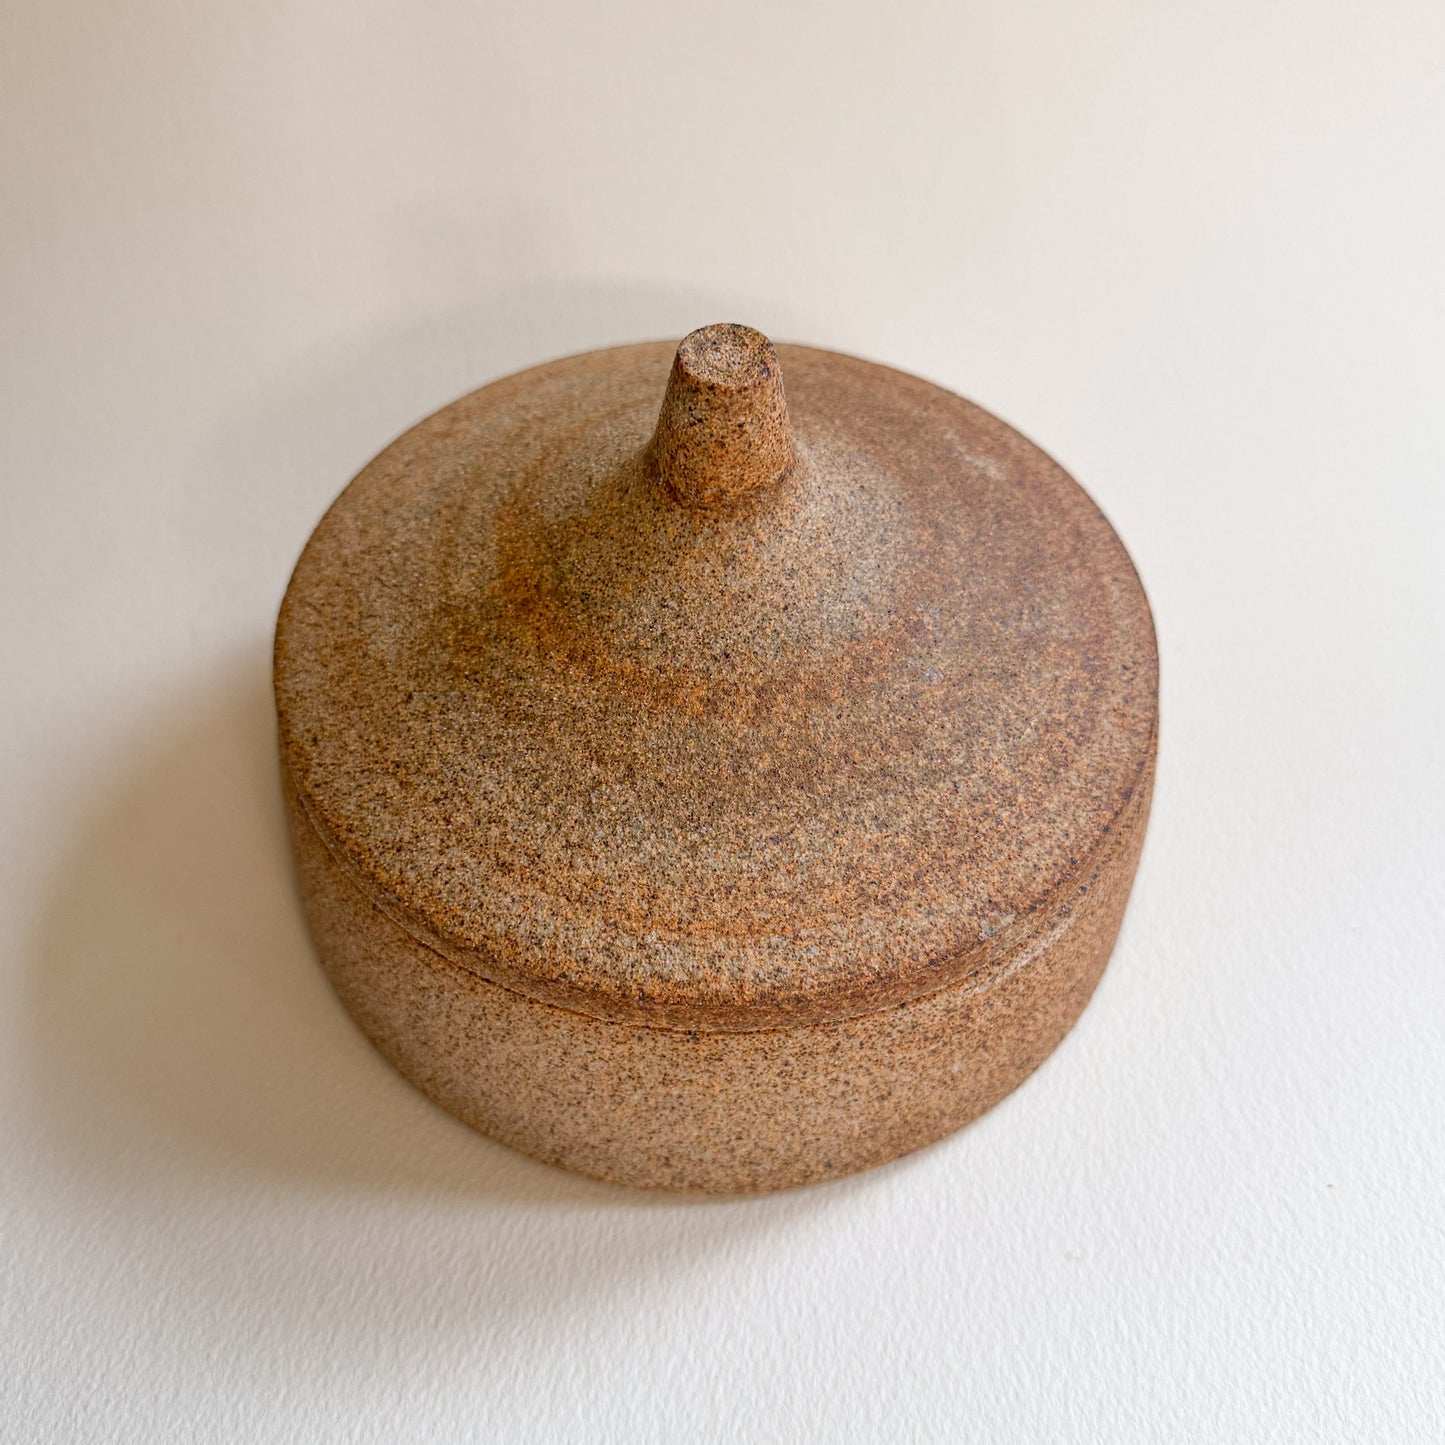 Sandstone Jar 008